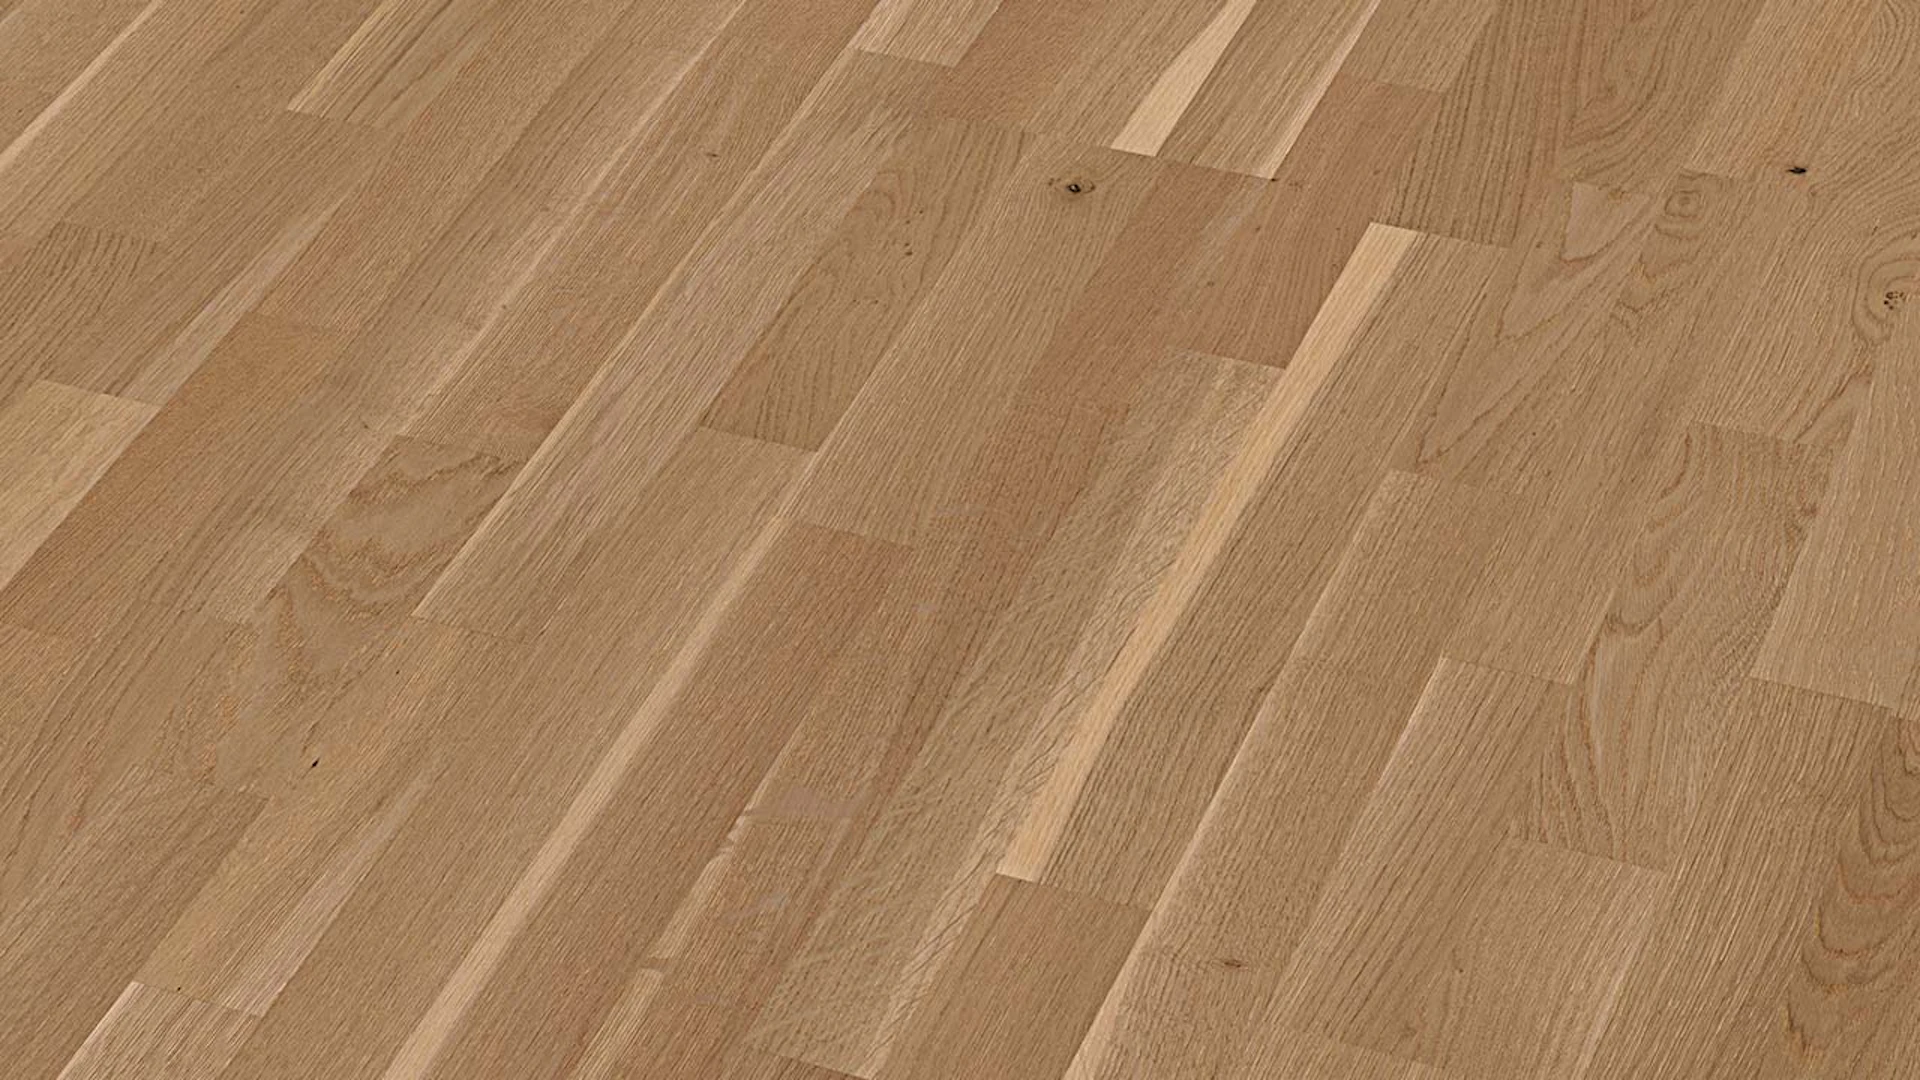 MEISTER Parquet Flooring - Longlife PC 200 Oak lively greige (500009-2400200-09038)